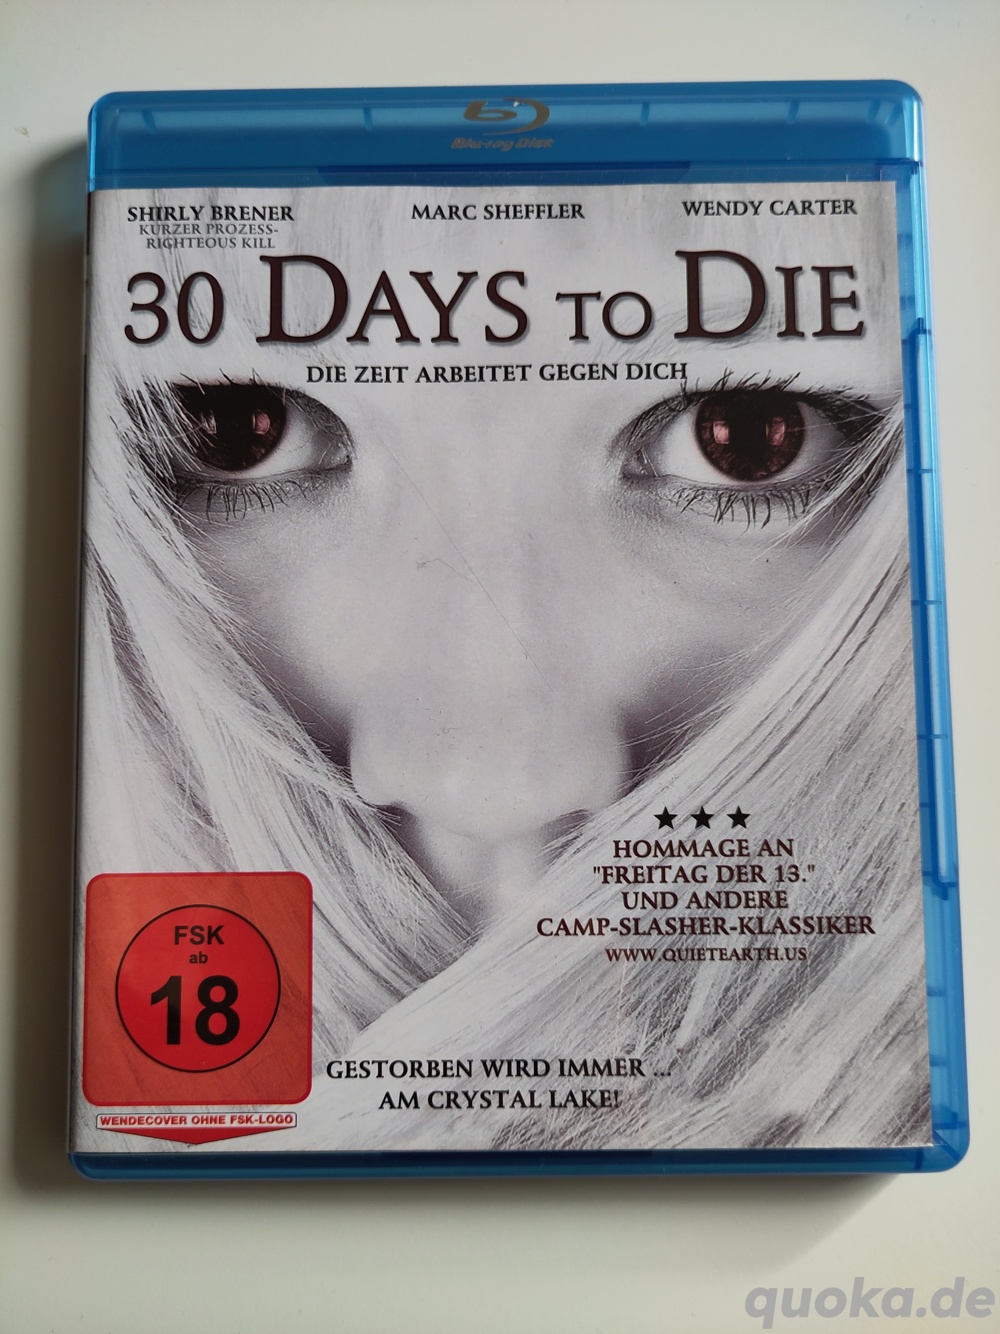 30 Days to Die | Blu-Ray, sehr gut | FSK 18 | Camp-Slasher Horror